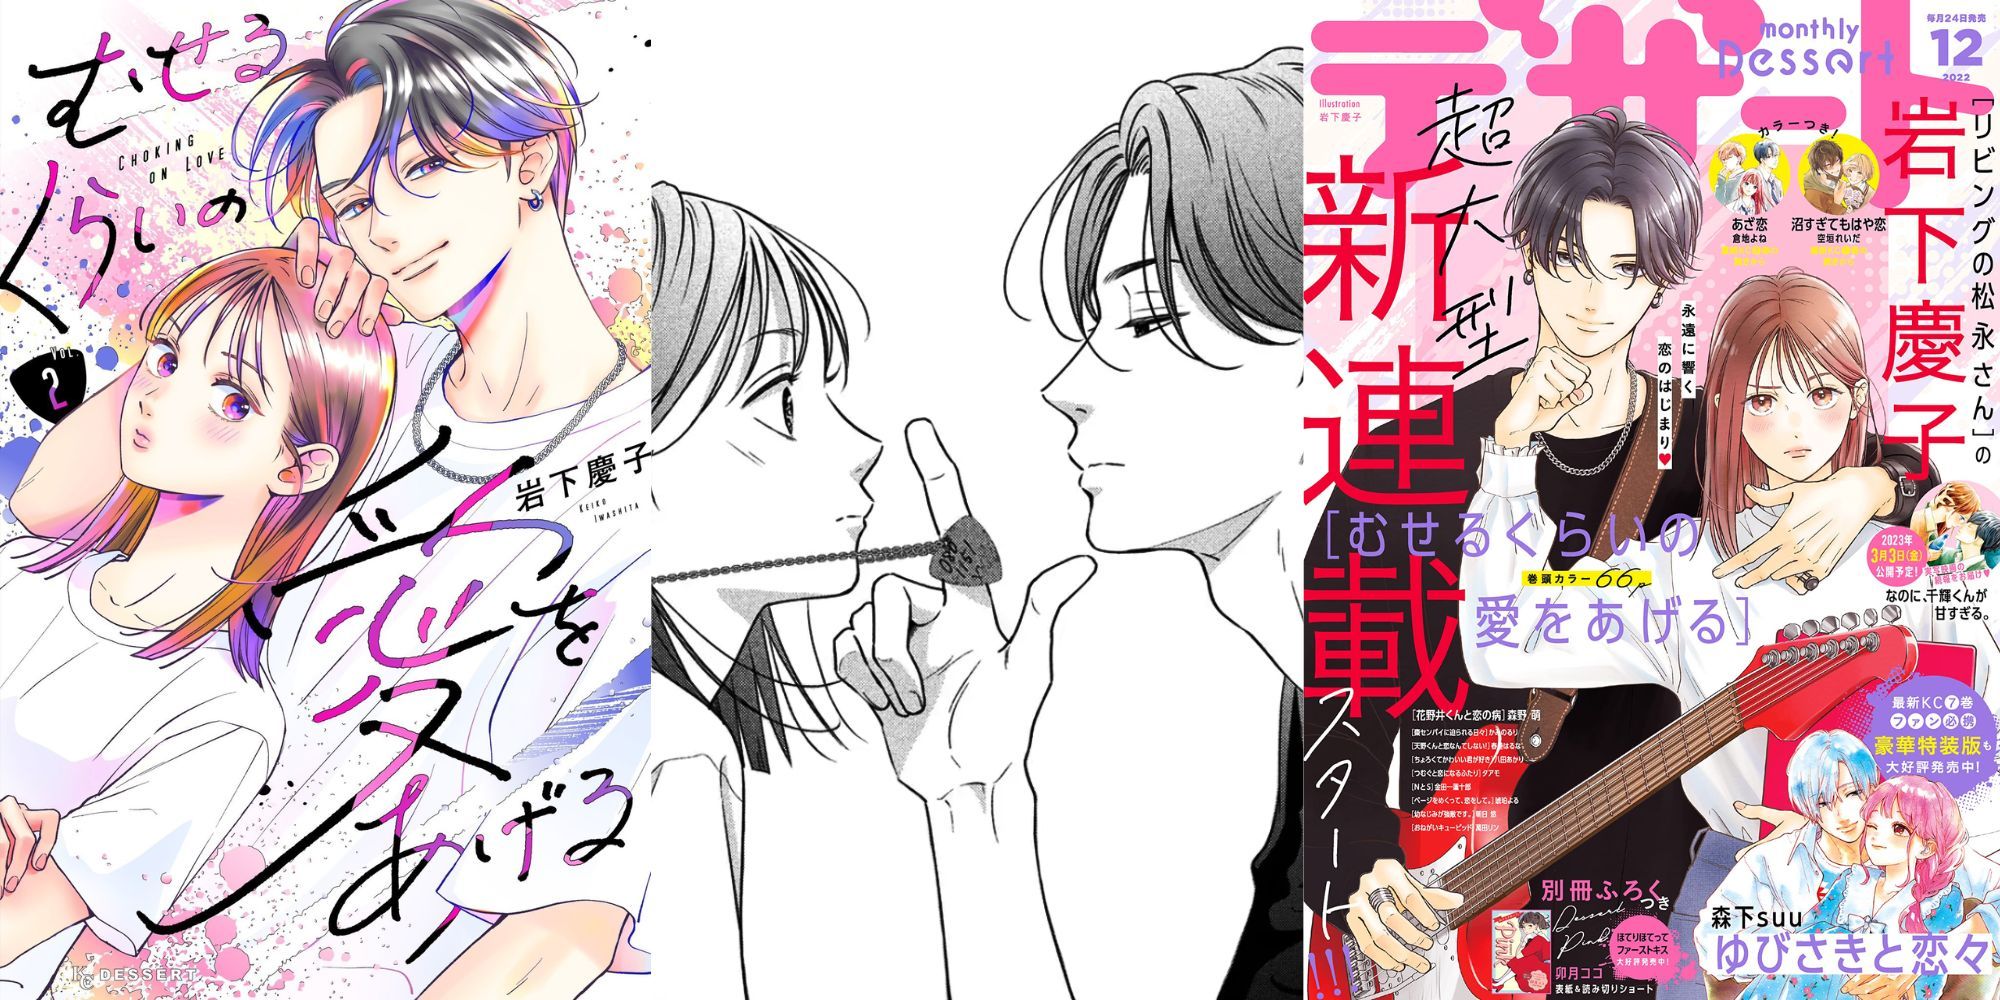 Choking on Love Manga Cover